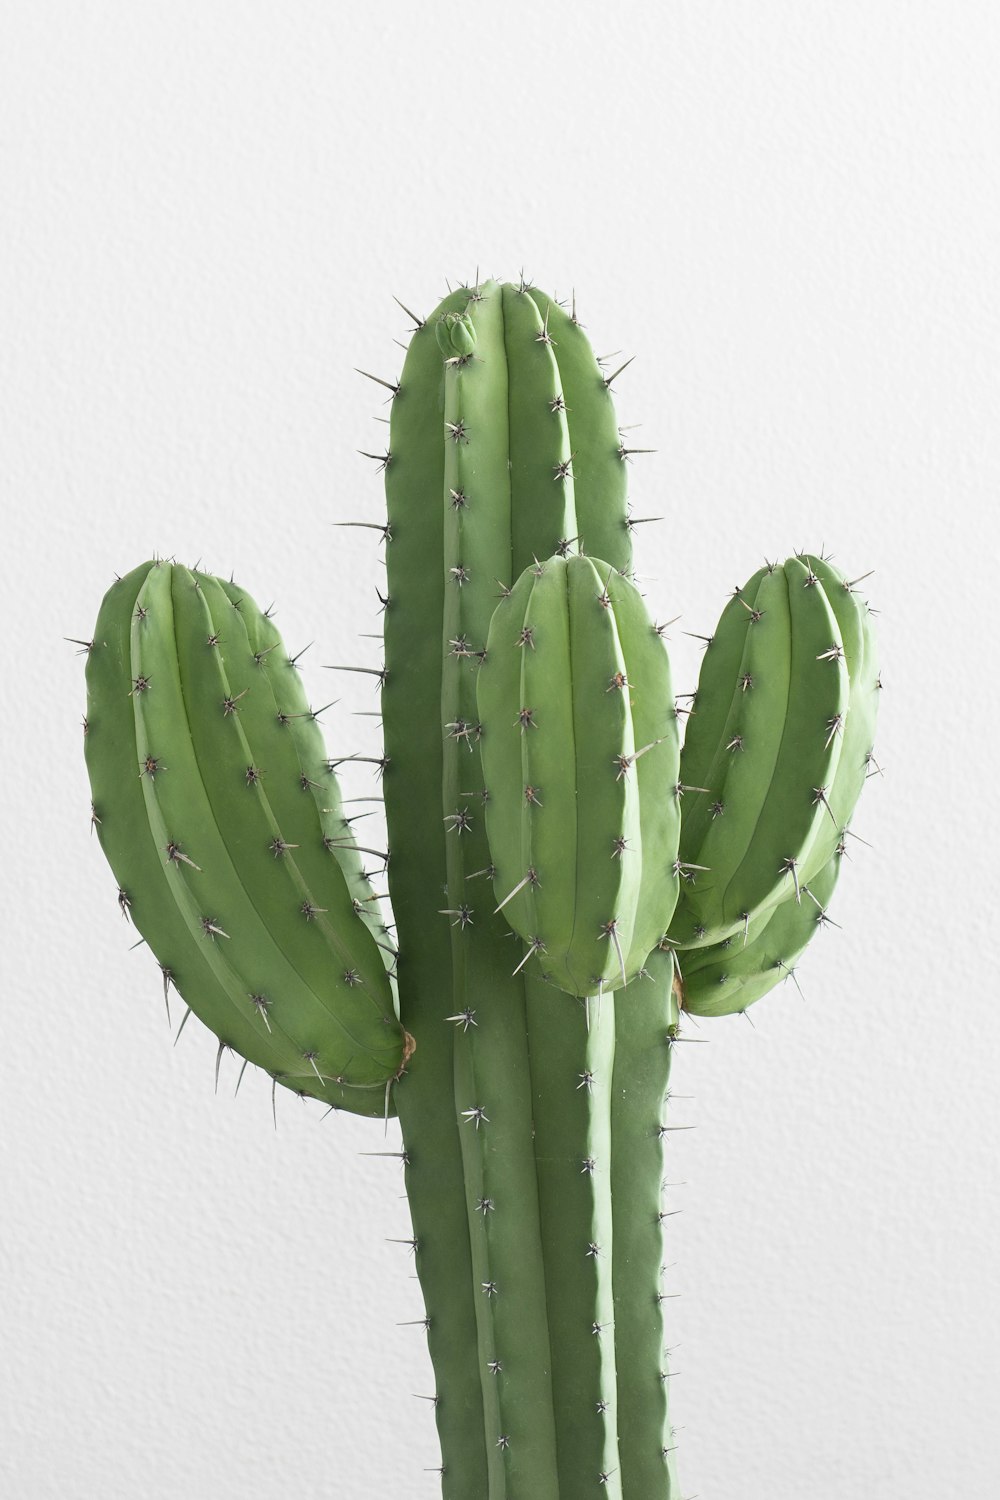 20+ Best Free Cactus Pictures on Unsplash